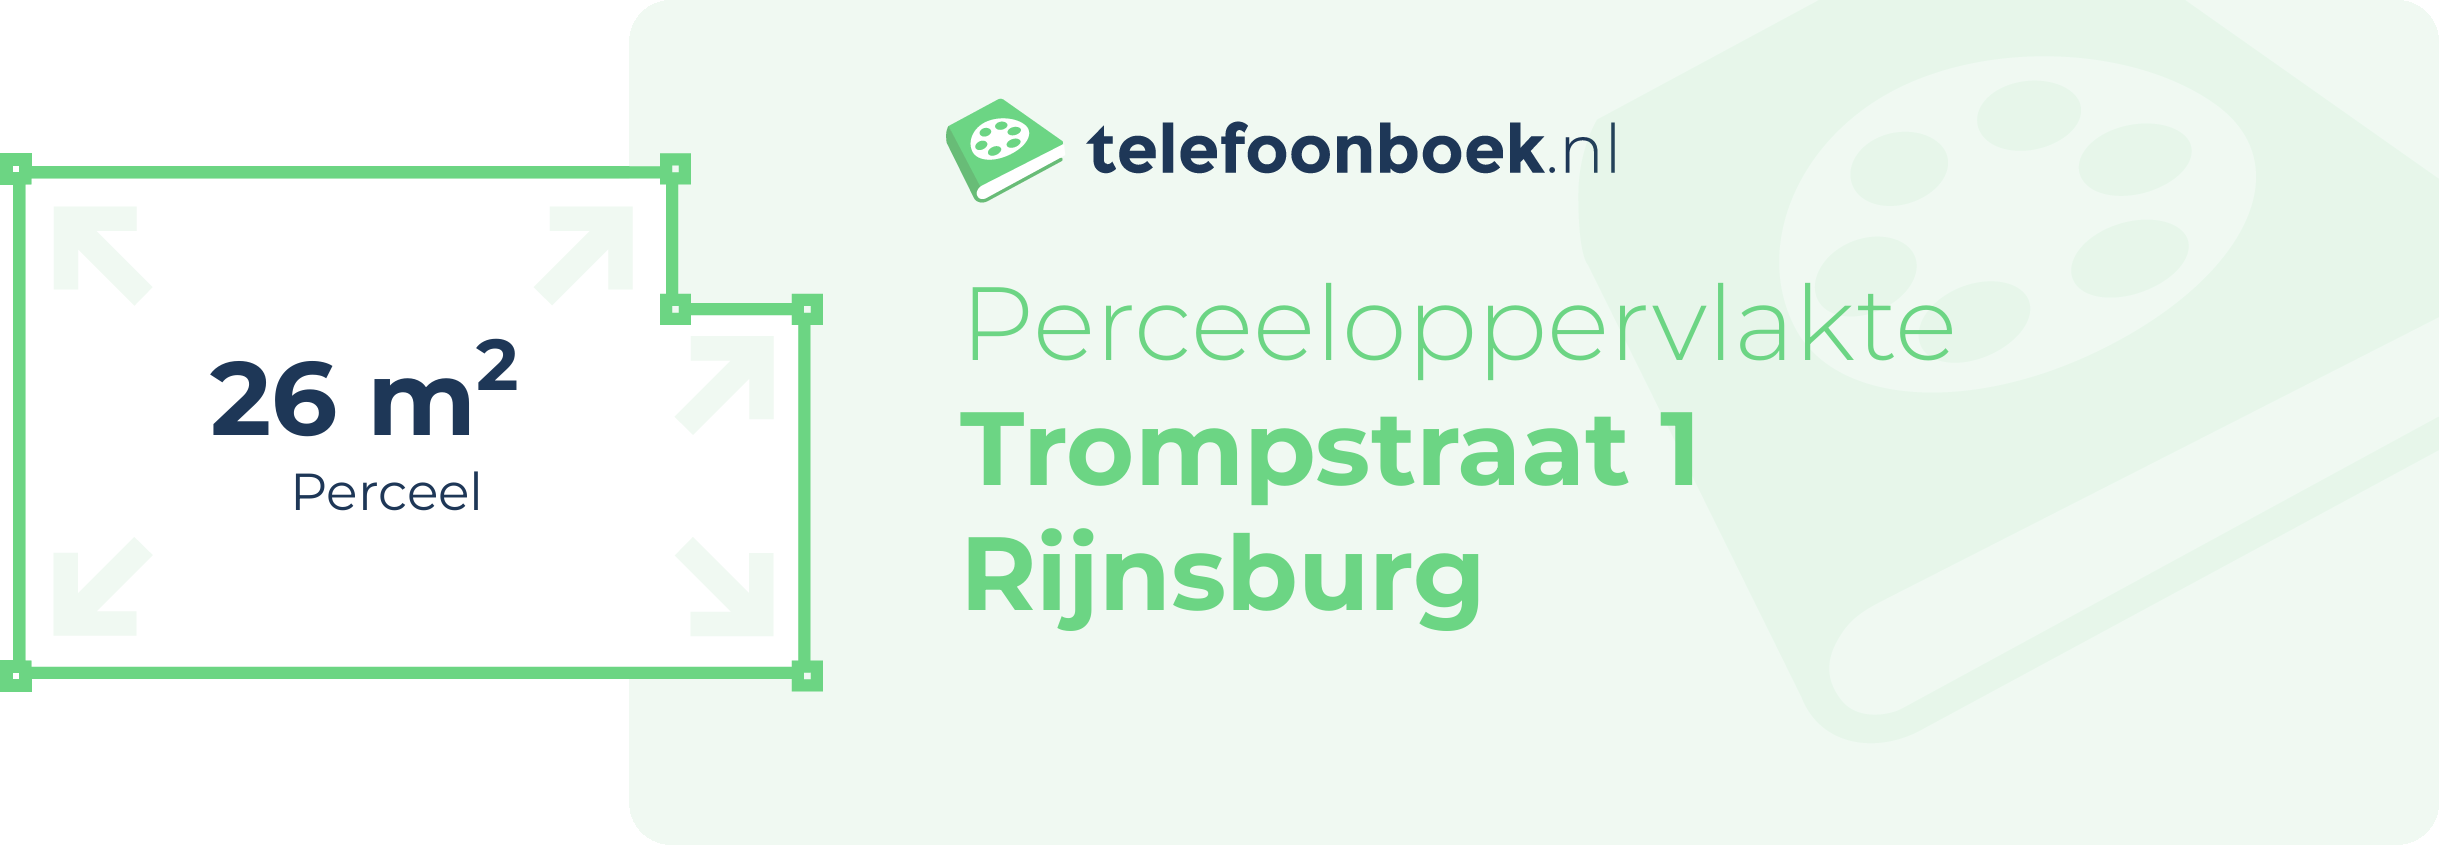 Perceeloppervlakte Trompstraat 1 Rijnsburg